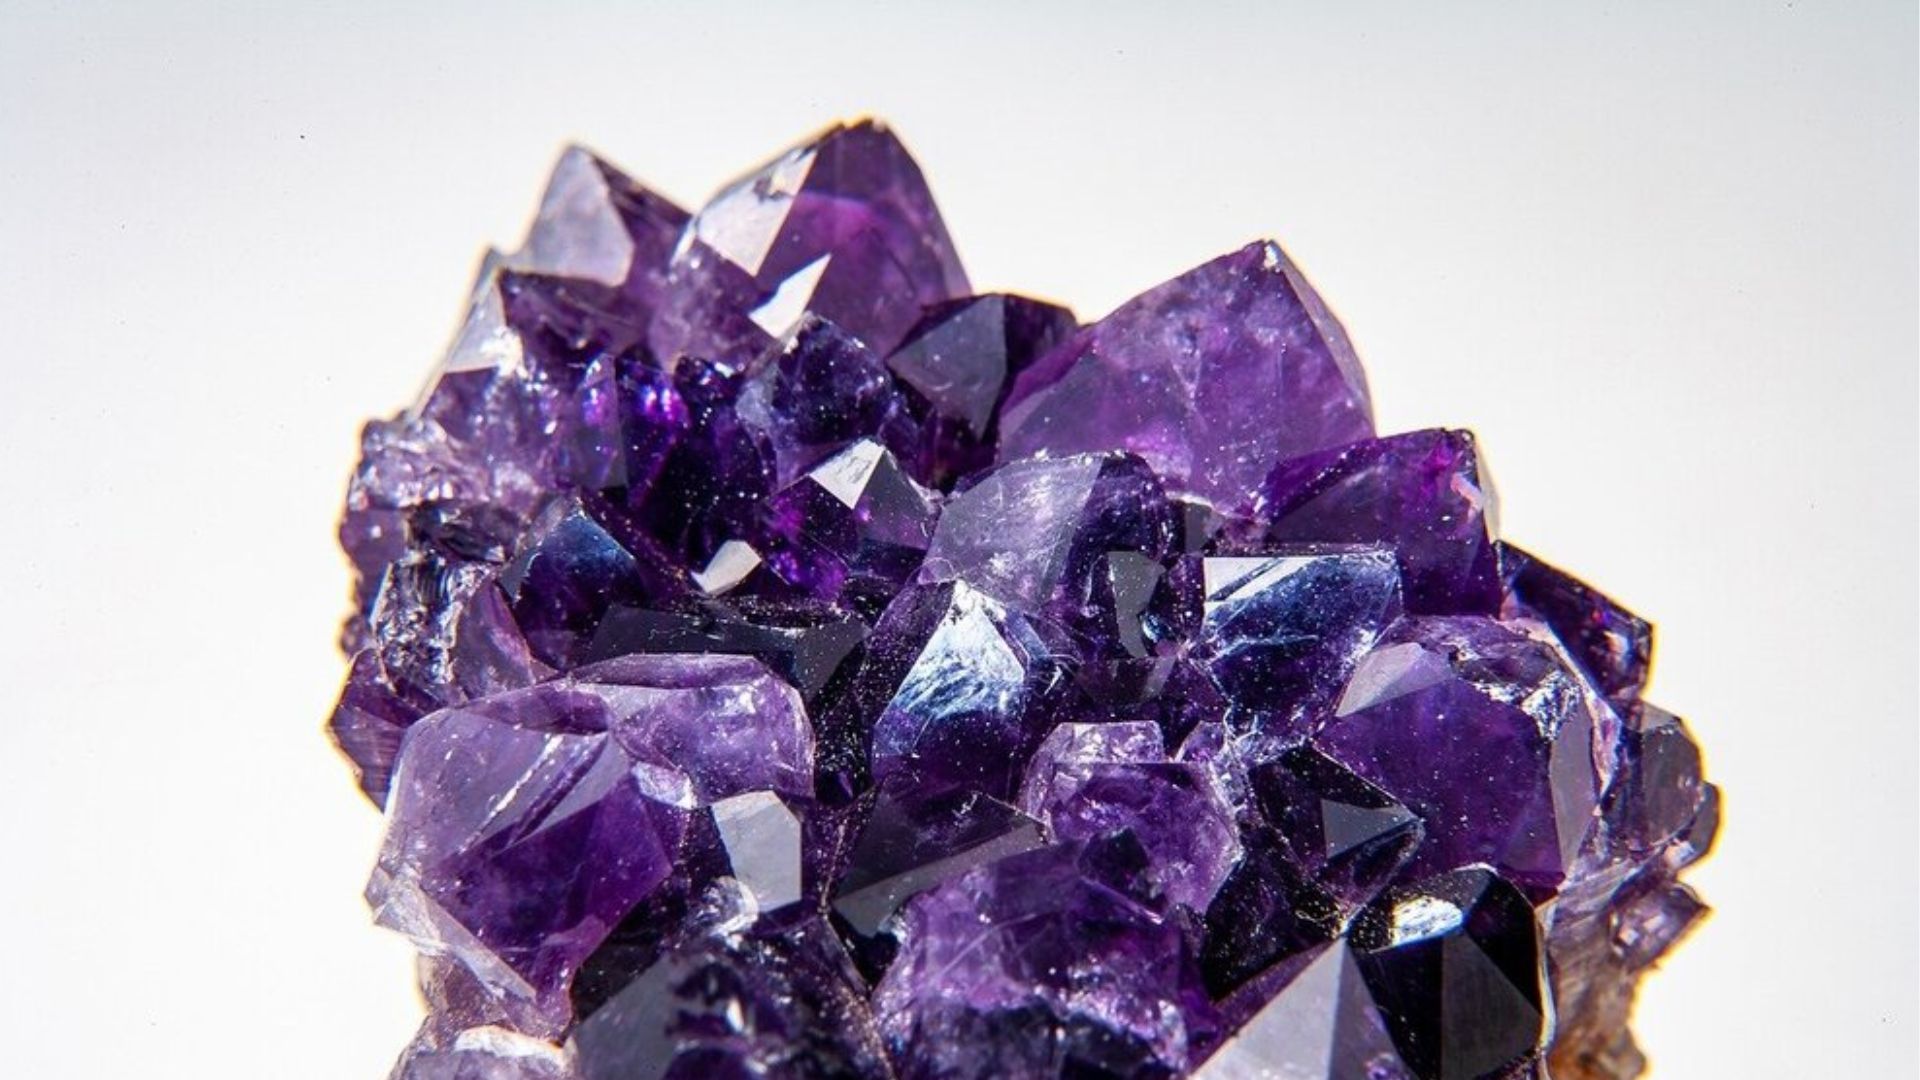 Chinks Of Purple Stone